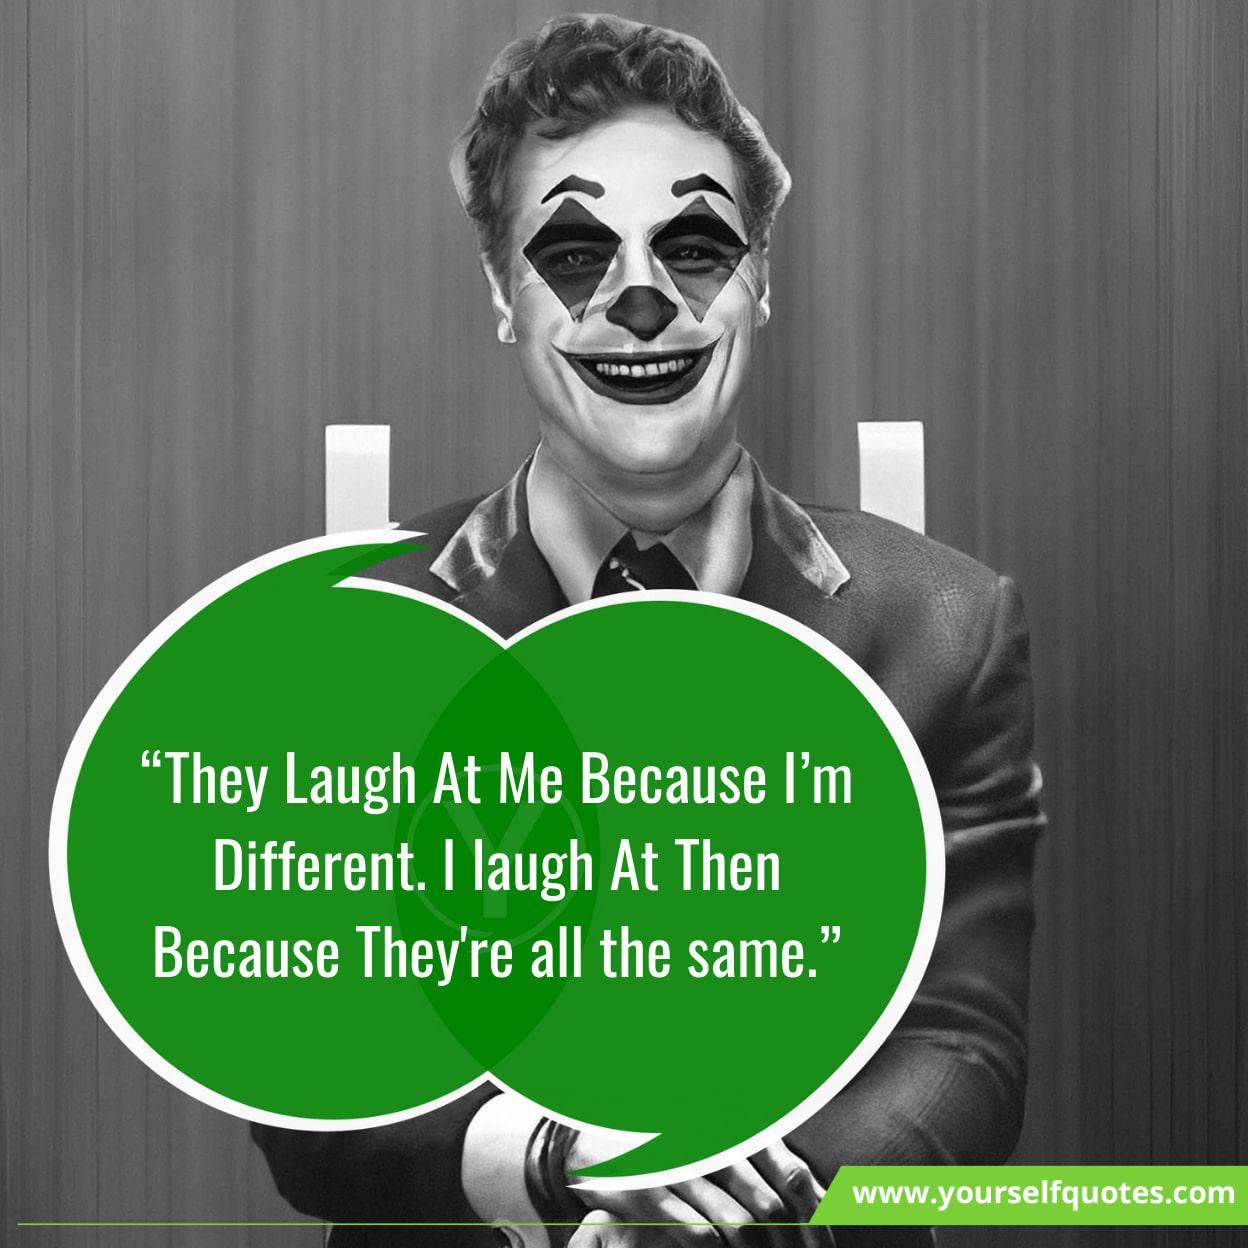 Inspirational Quotes On Joker